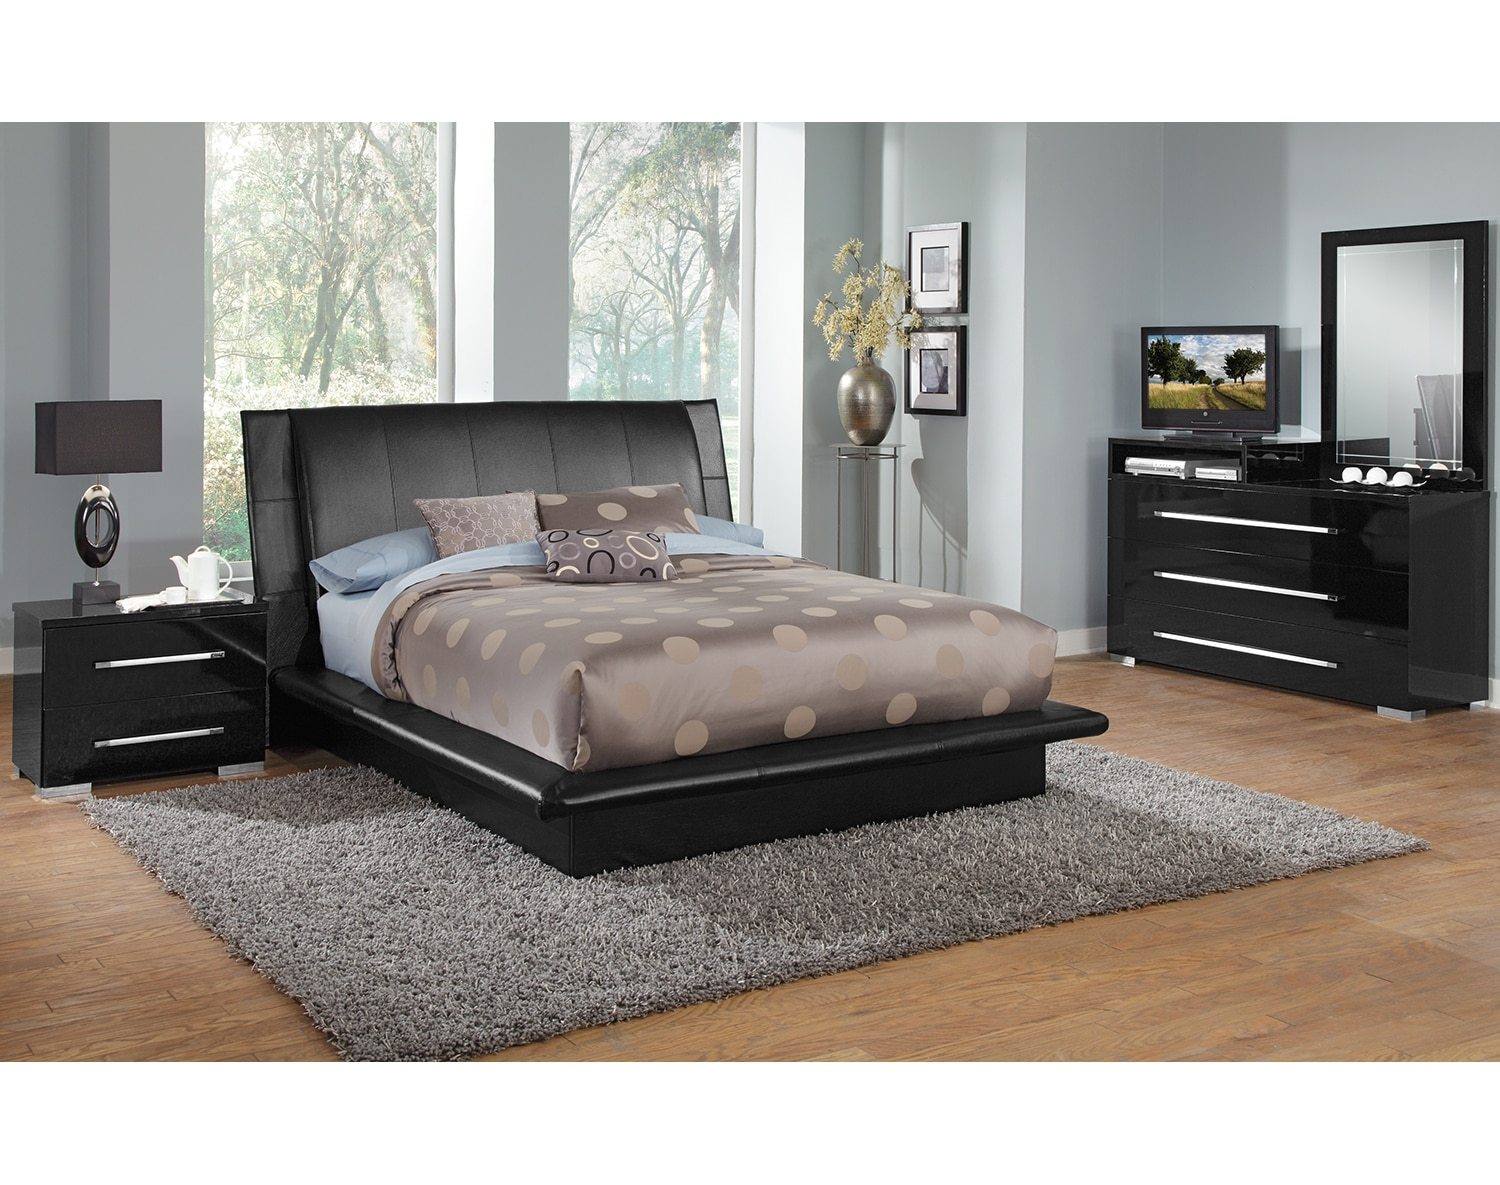 black lacquer bedroom furniture photo - 7